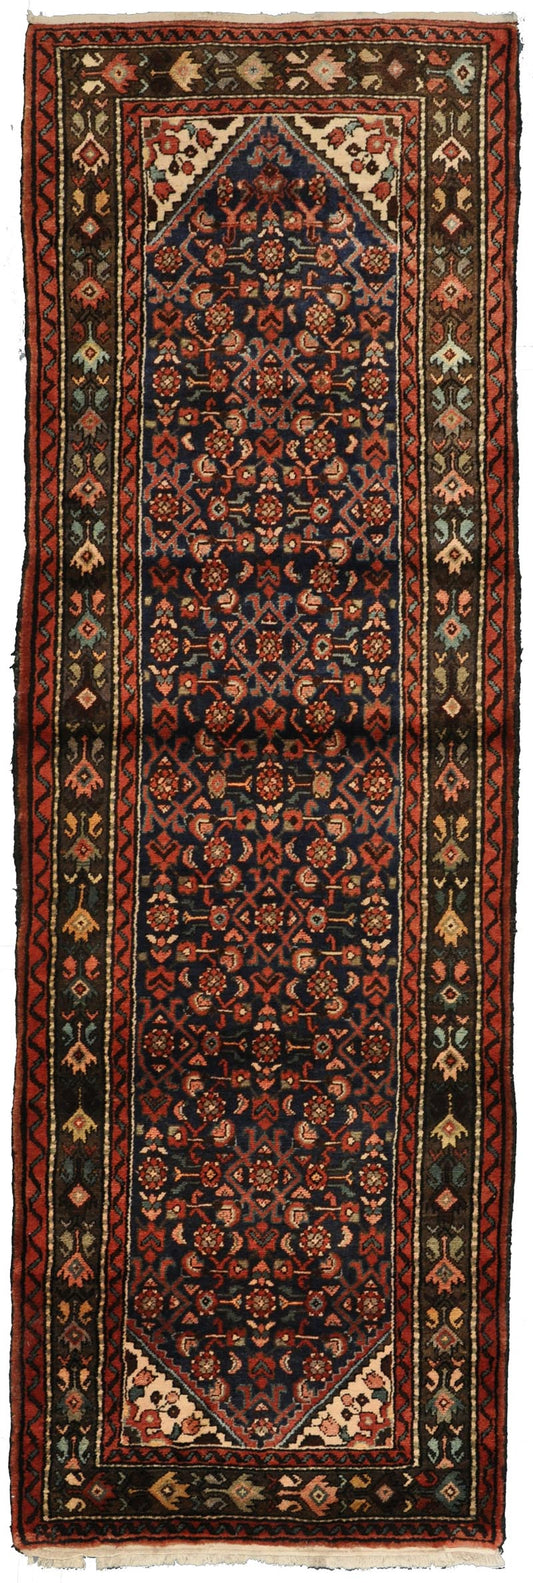 vintage persian rug handmade antique runner rug online rug store persian hamadan orange county rug store refined carpet rugs vintage carpet